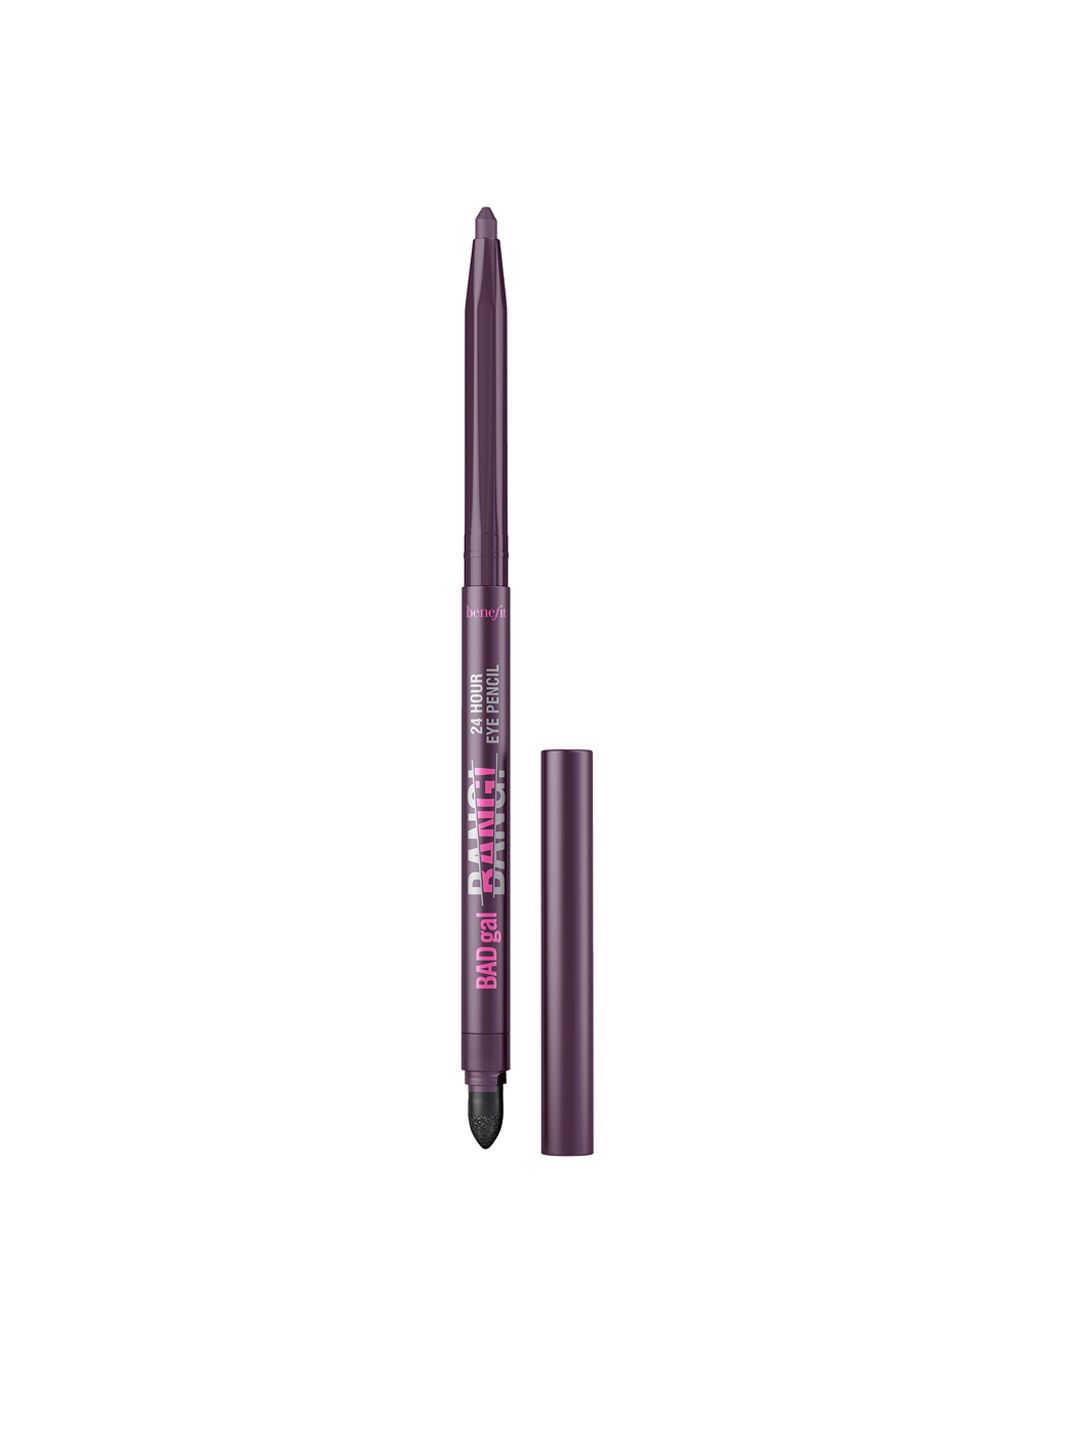 Benefit Cosmetics BADgal Bang Pencil Eyeliner - Dark Purple 0.25 g Price in India